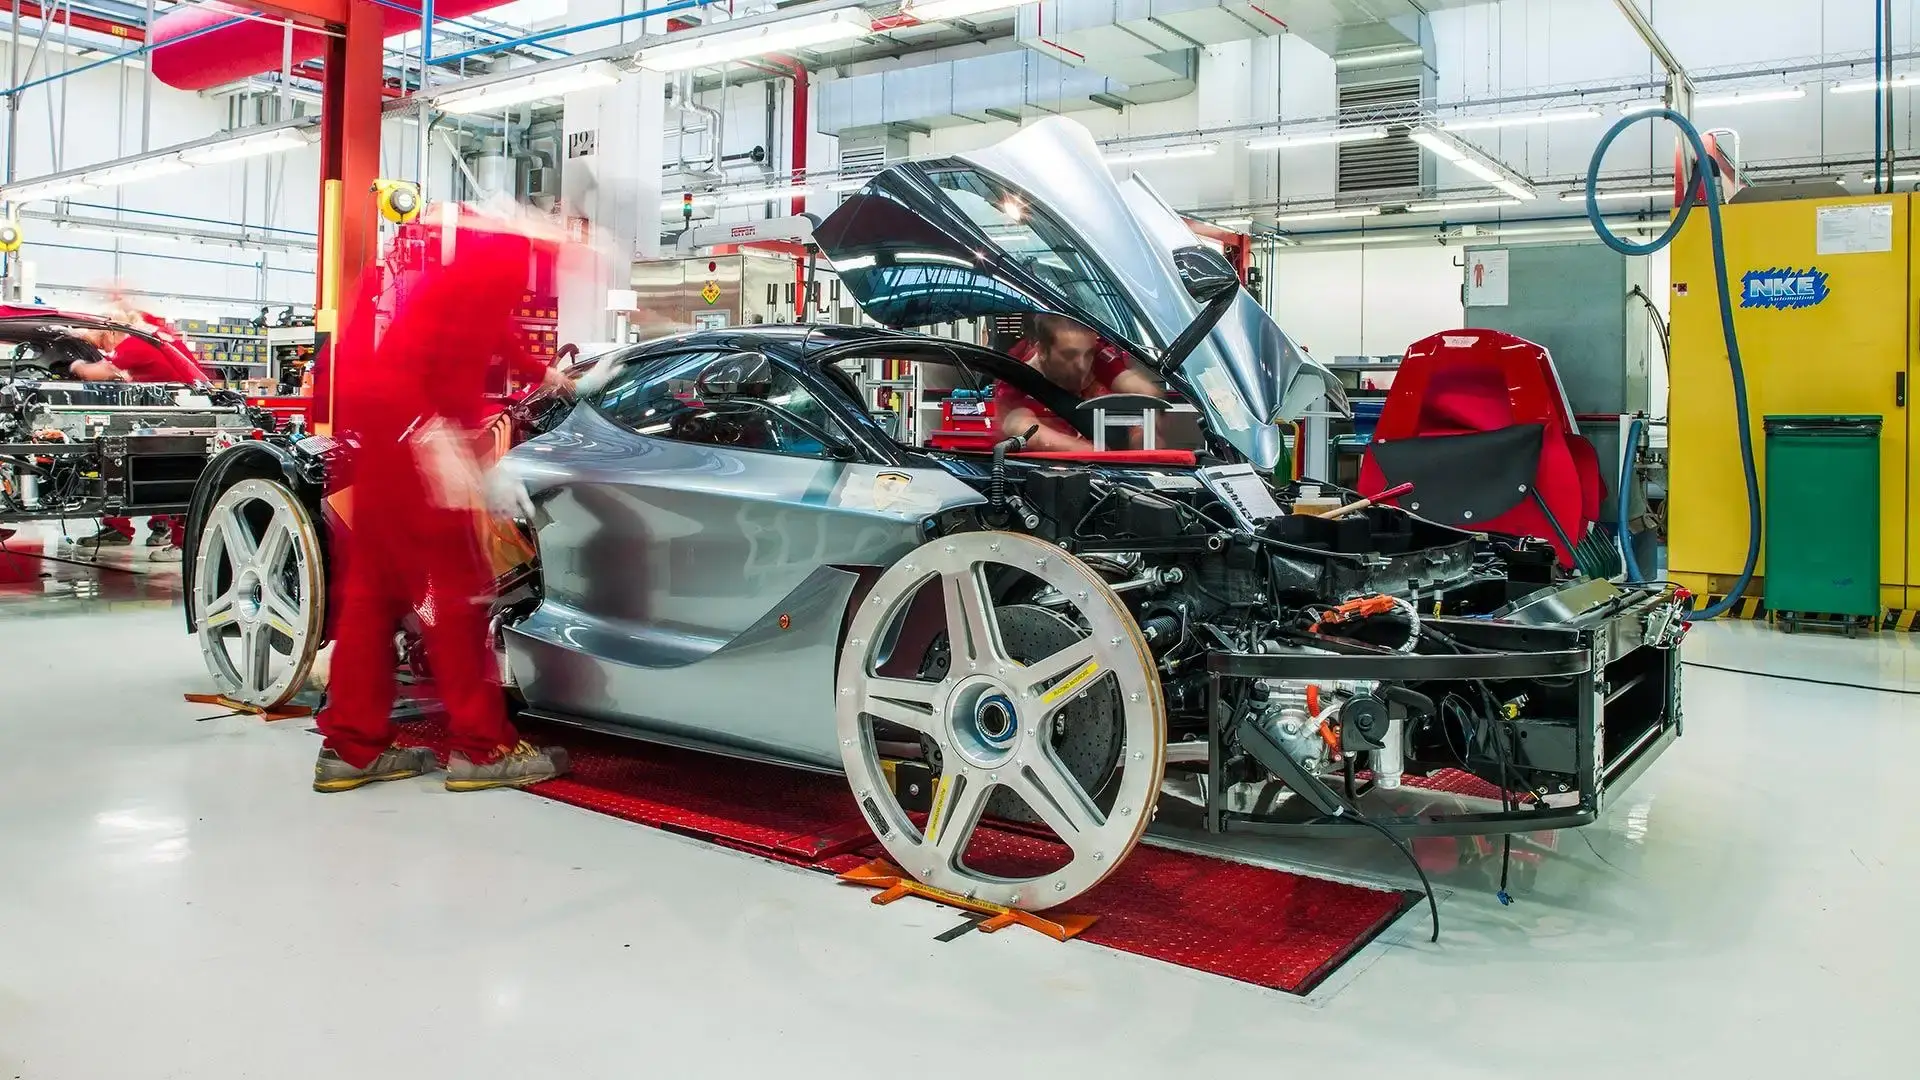 A million dollars per part: the cost of repairing a Ferrari LaFerrari has been declassified